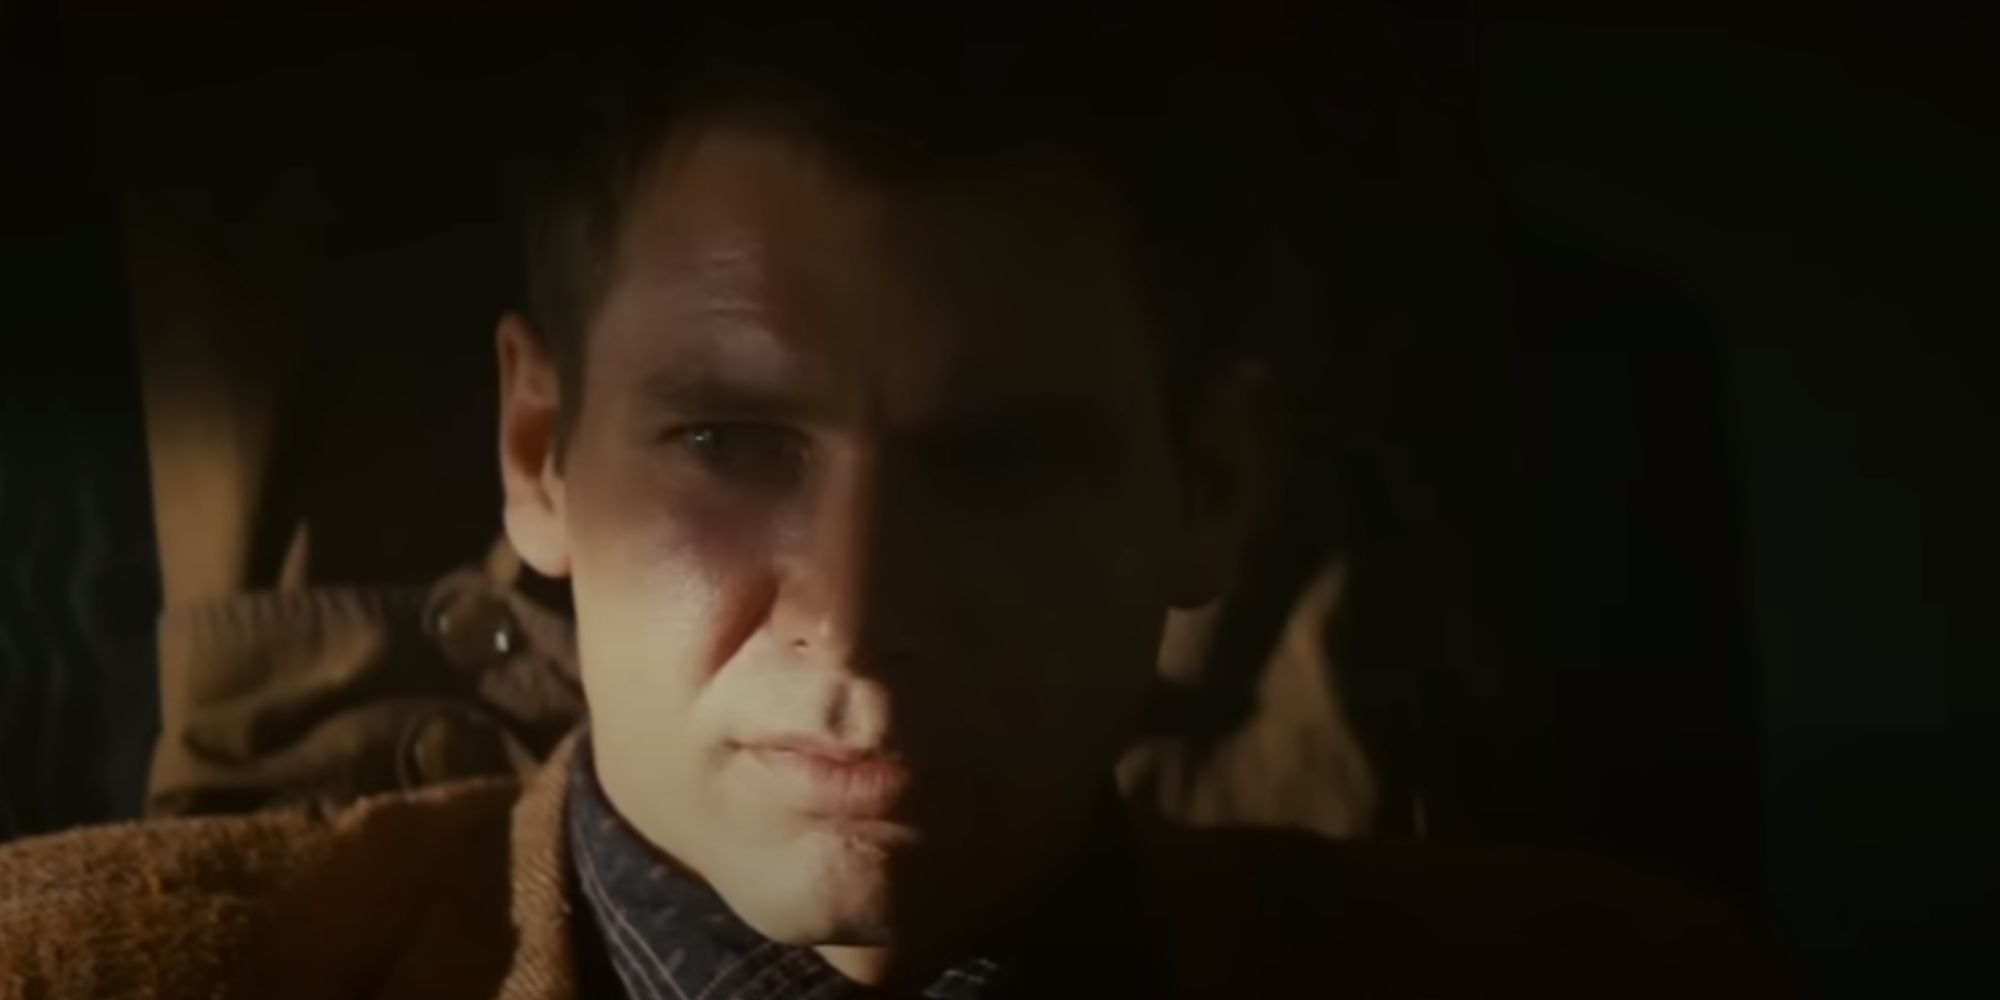 Harrison Ford looking sad as Rick Deckard in Blade Runner